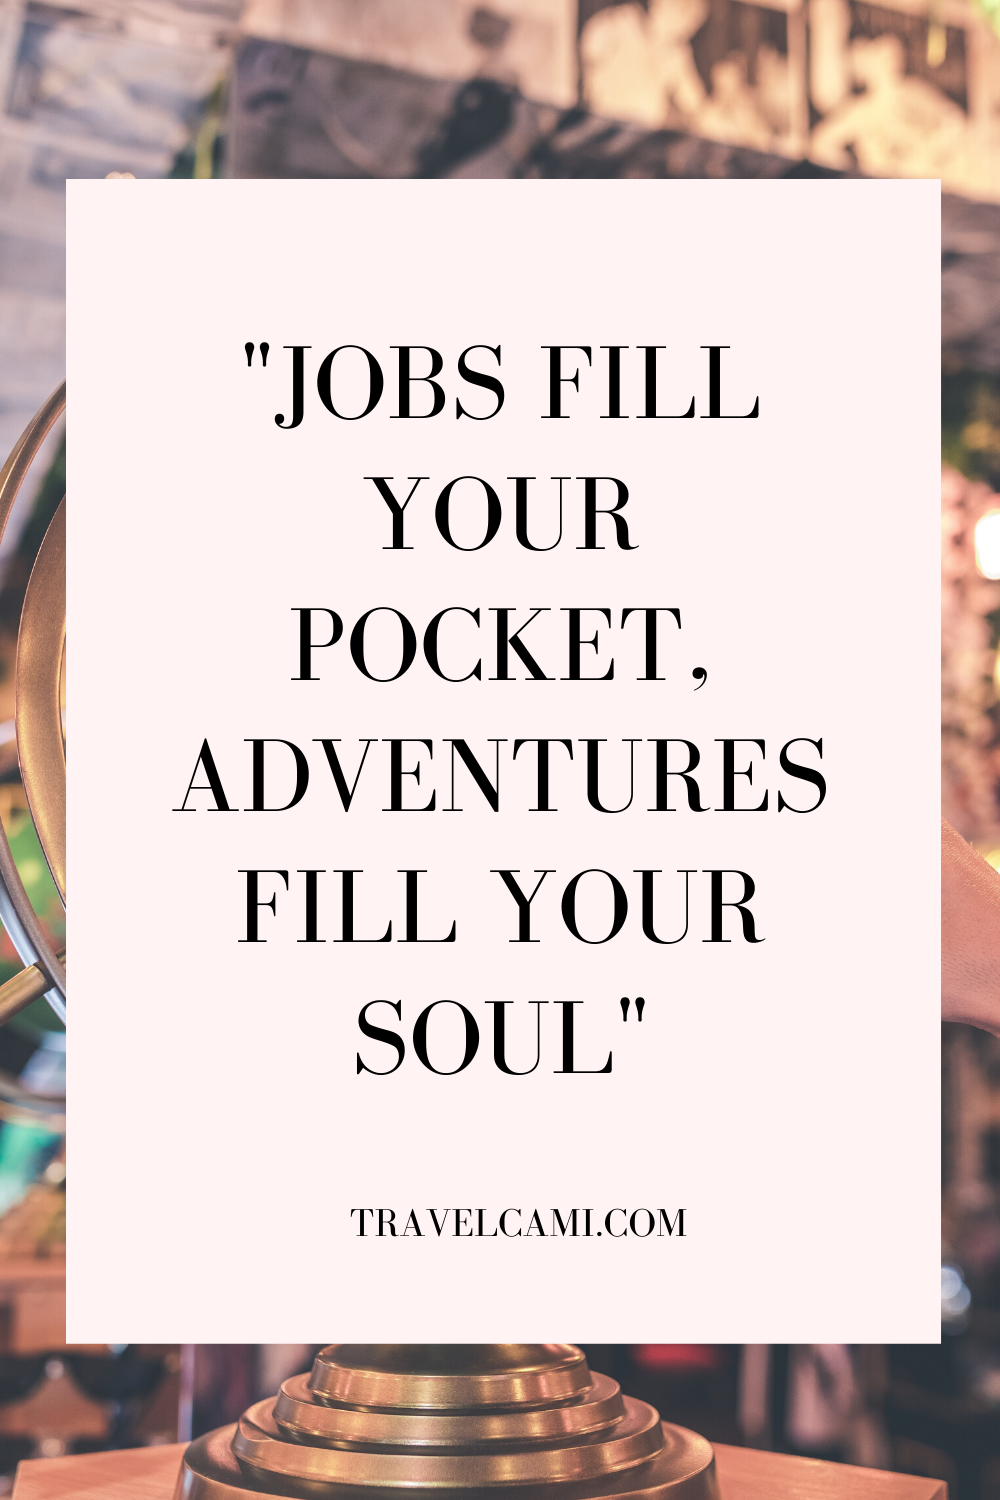 instagram travel quotes - travel captions - travel cami